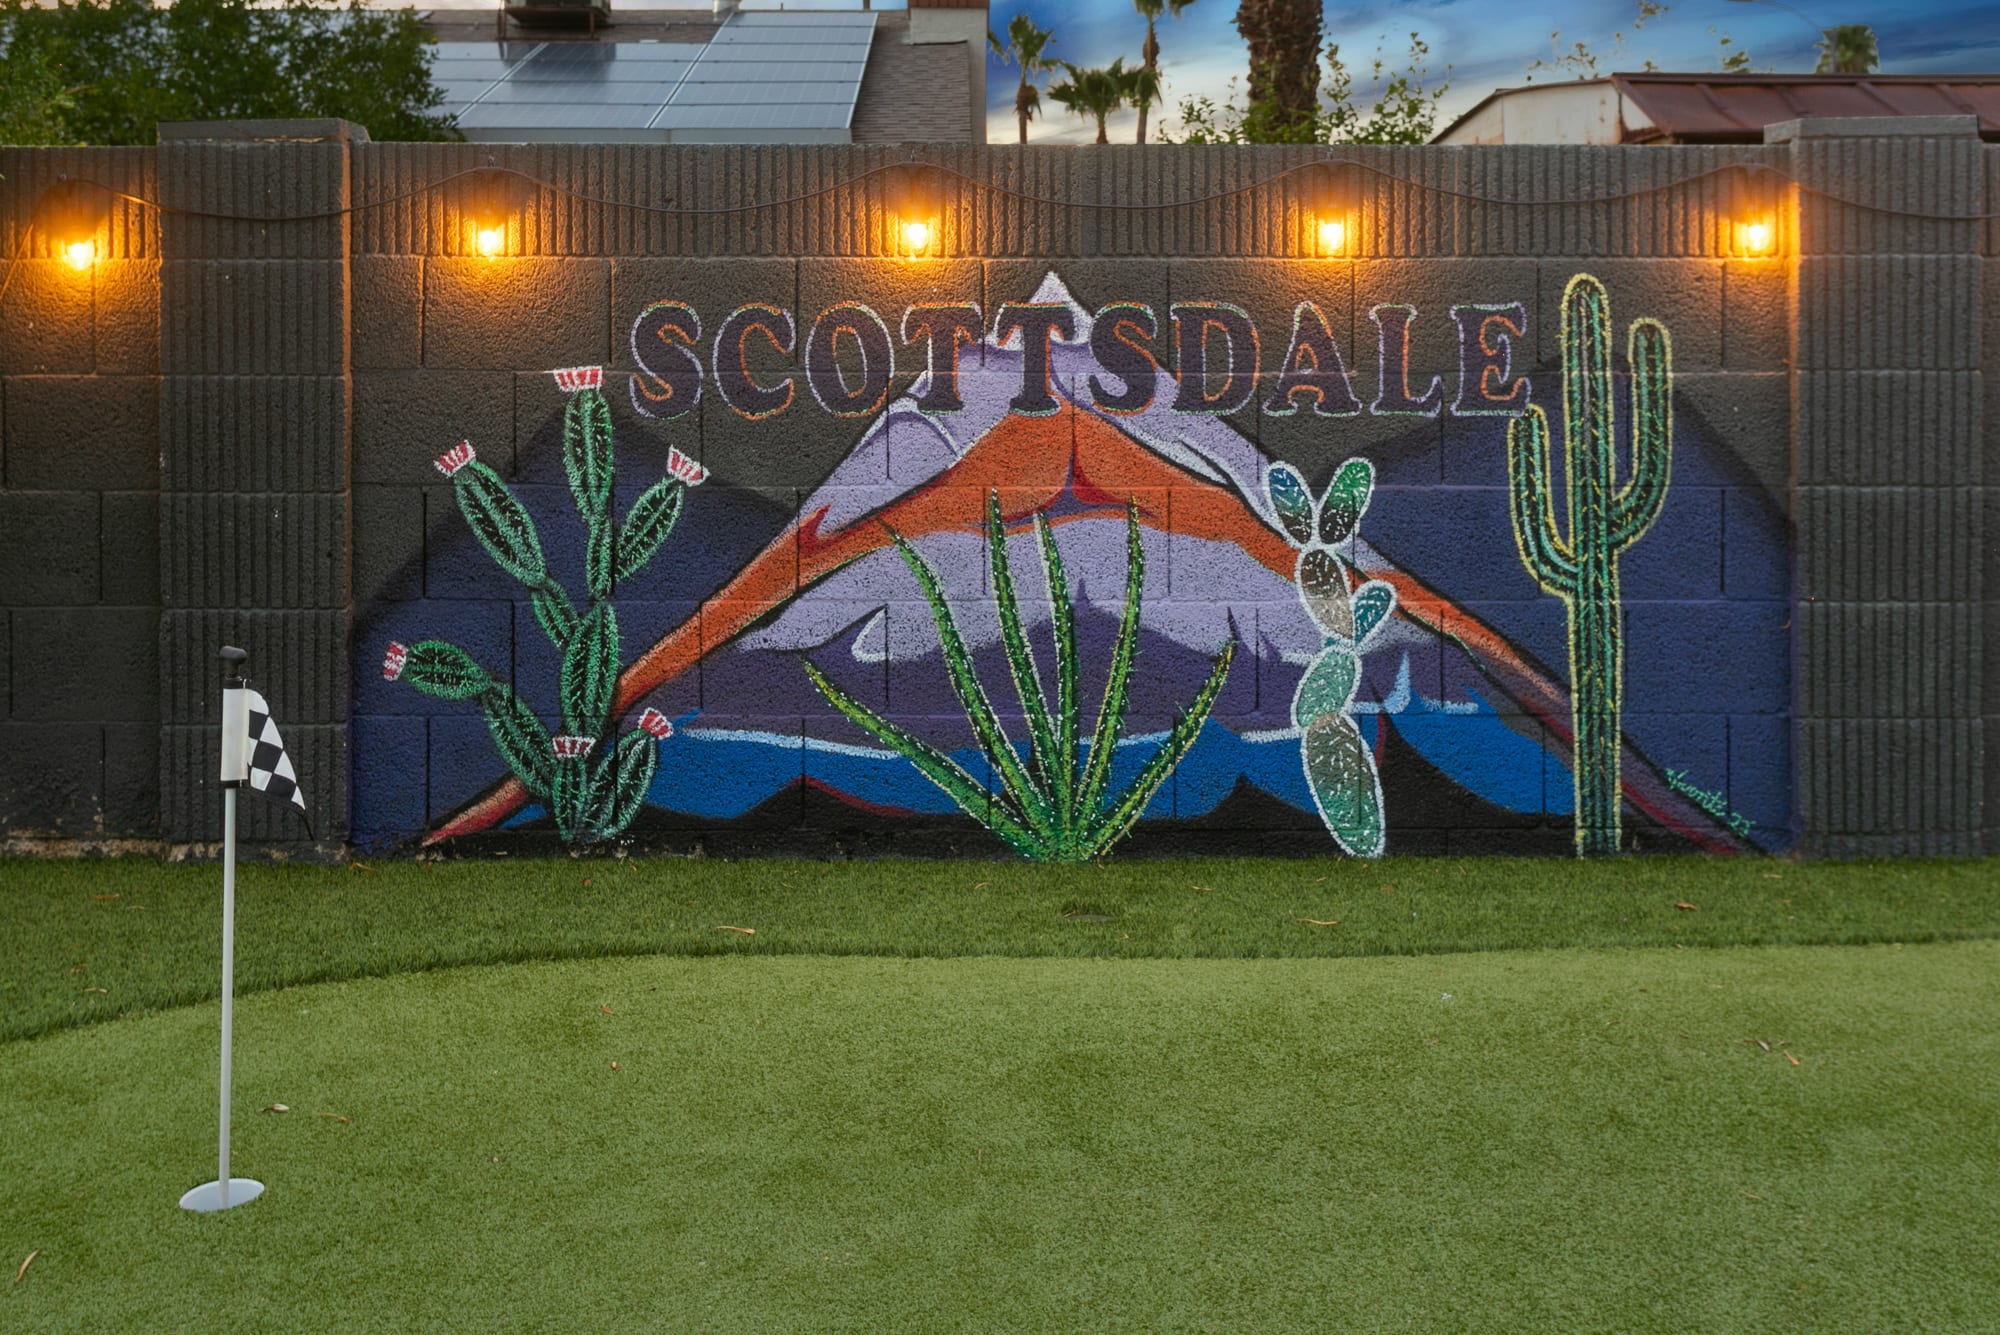 Beautiful Scottsdale Mural done by a local muralist